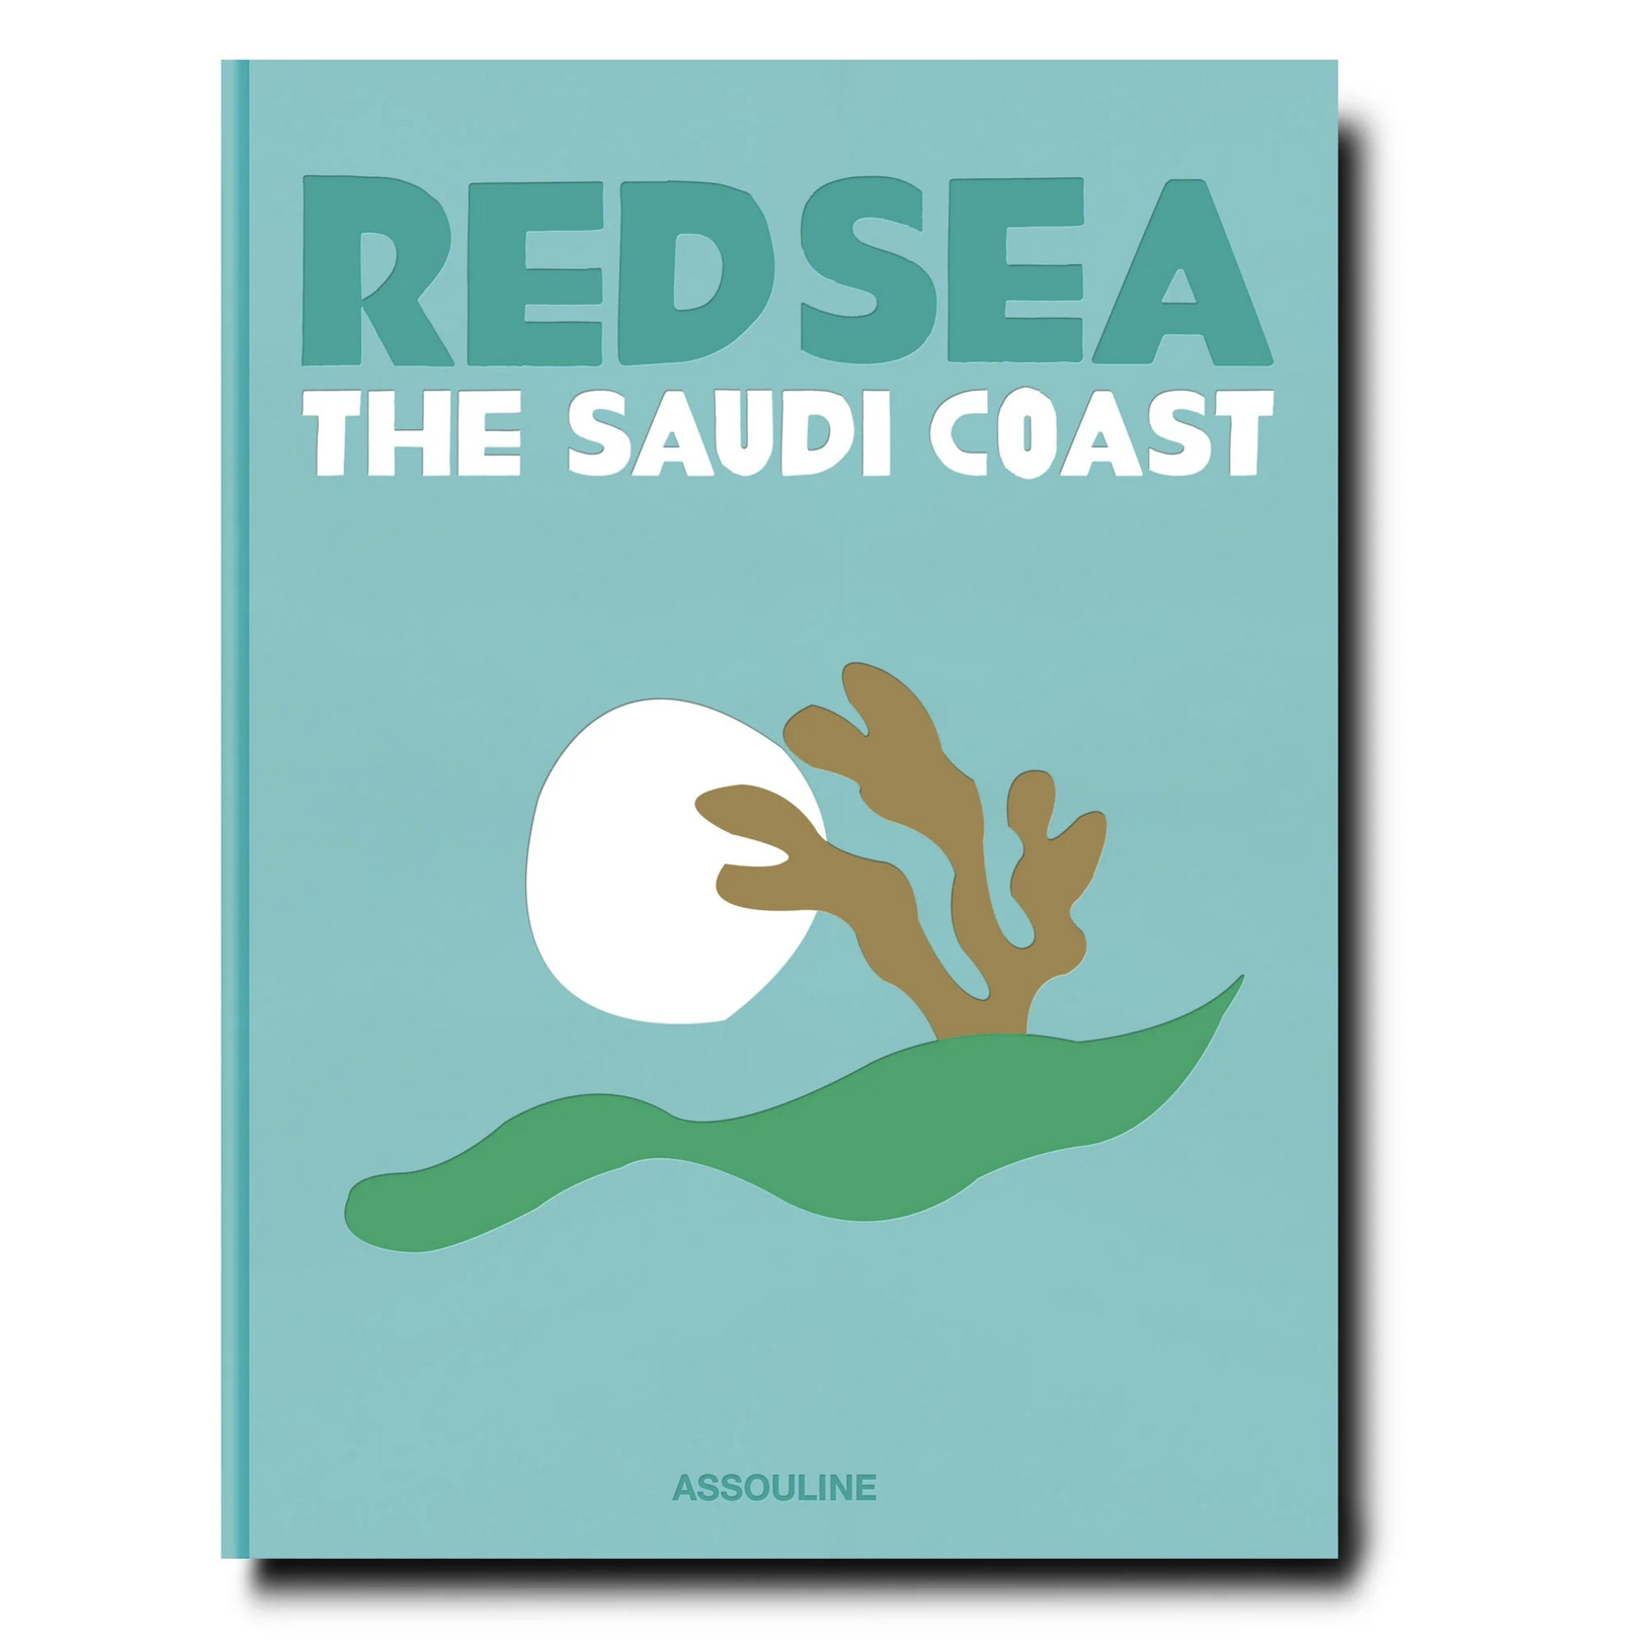 Website Red Sea, The Saudi Coast